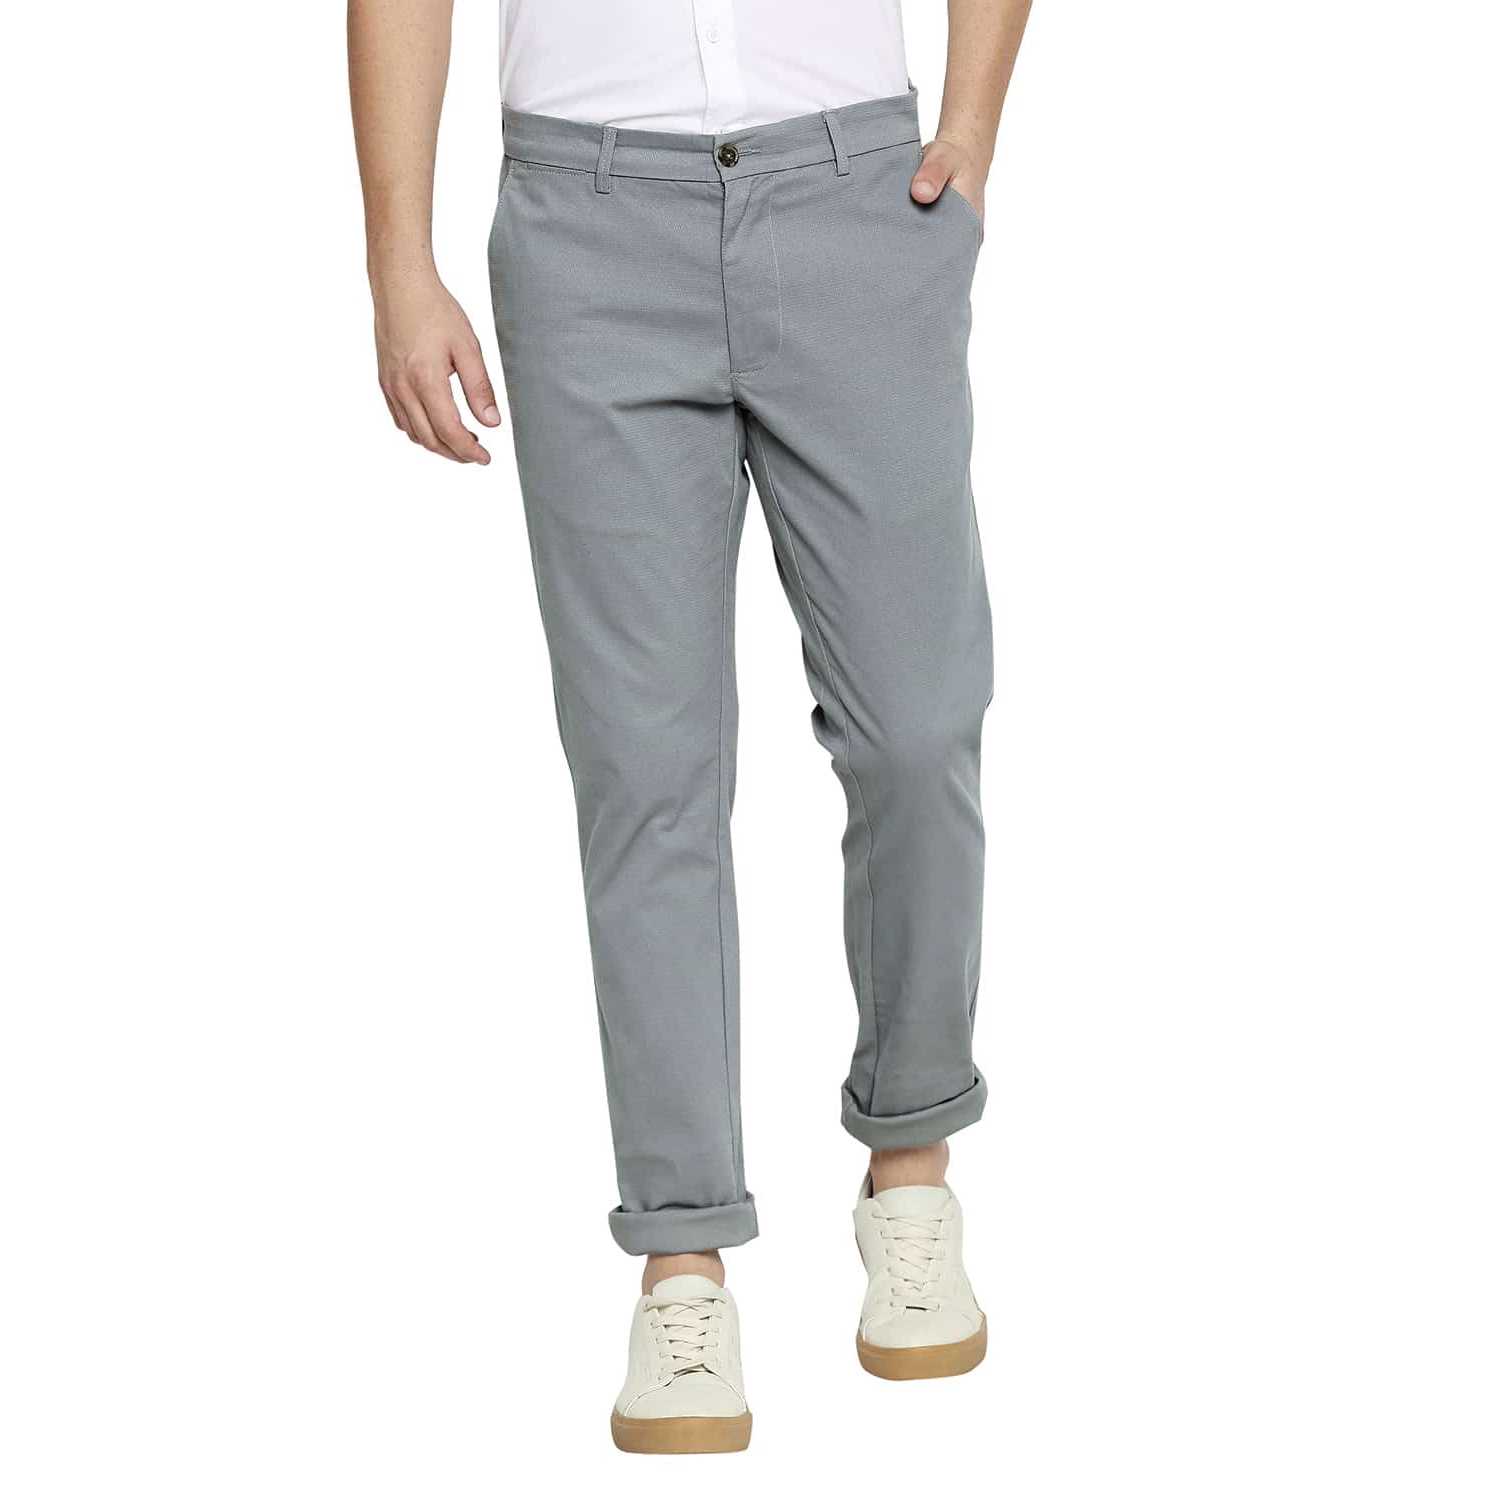 Basics | Basics Tapered Fit Limestone Grey Stretch Trousers